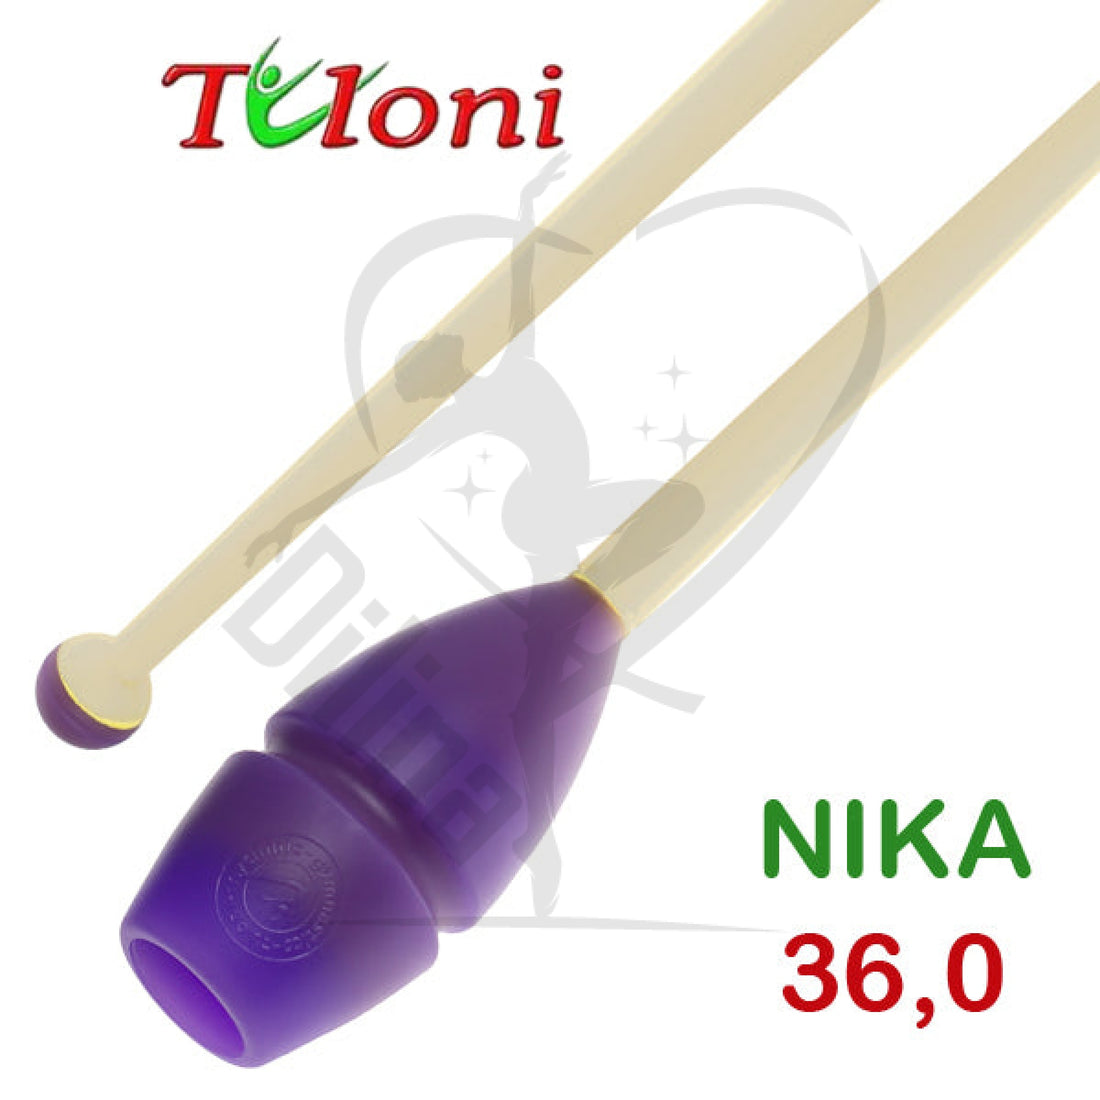 Tuloni Bi-Colour Connectable Clubs Mos. Nika 36Cm Purple X White